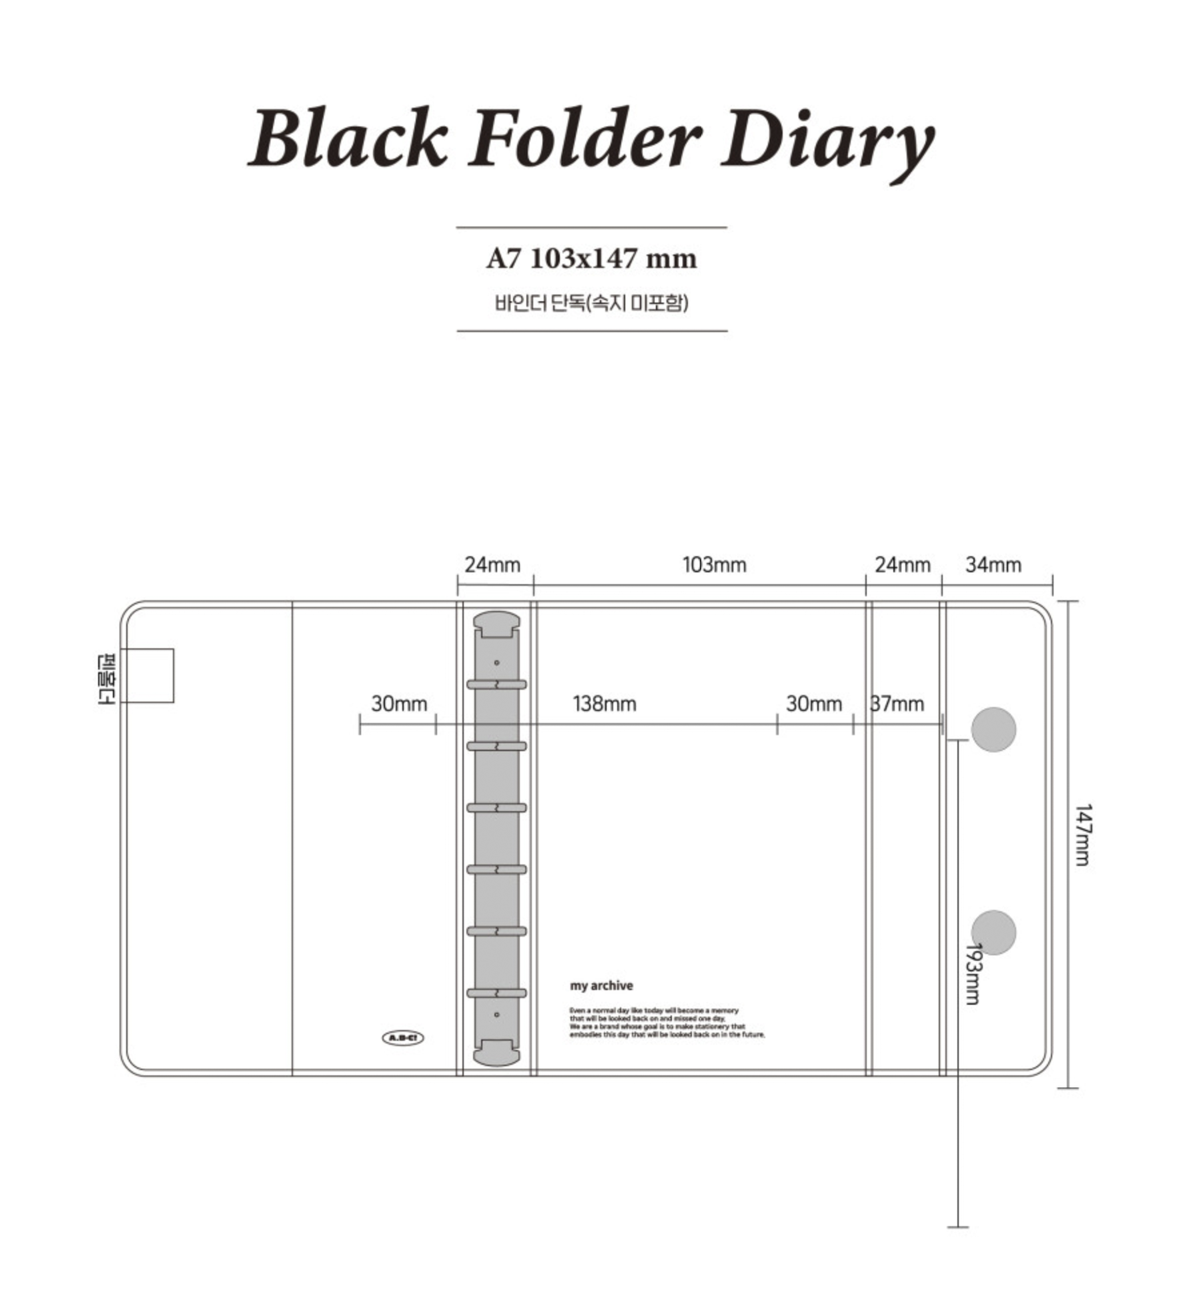 A7 Black Folder Binder